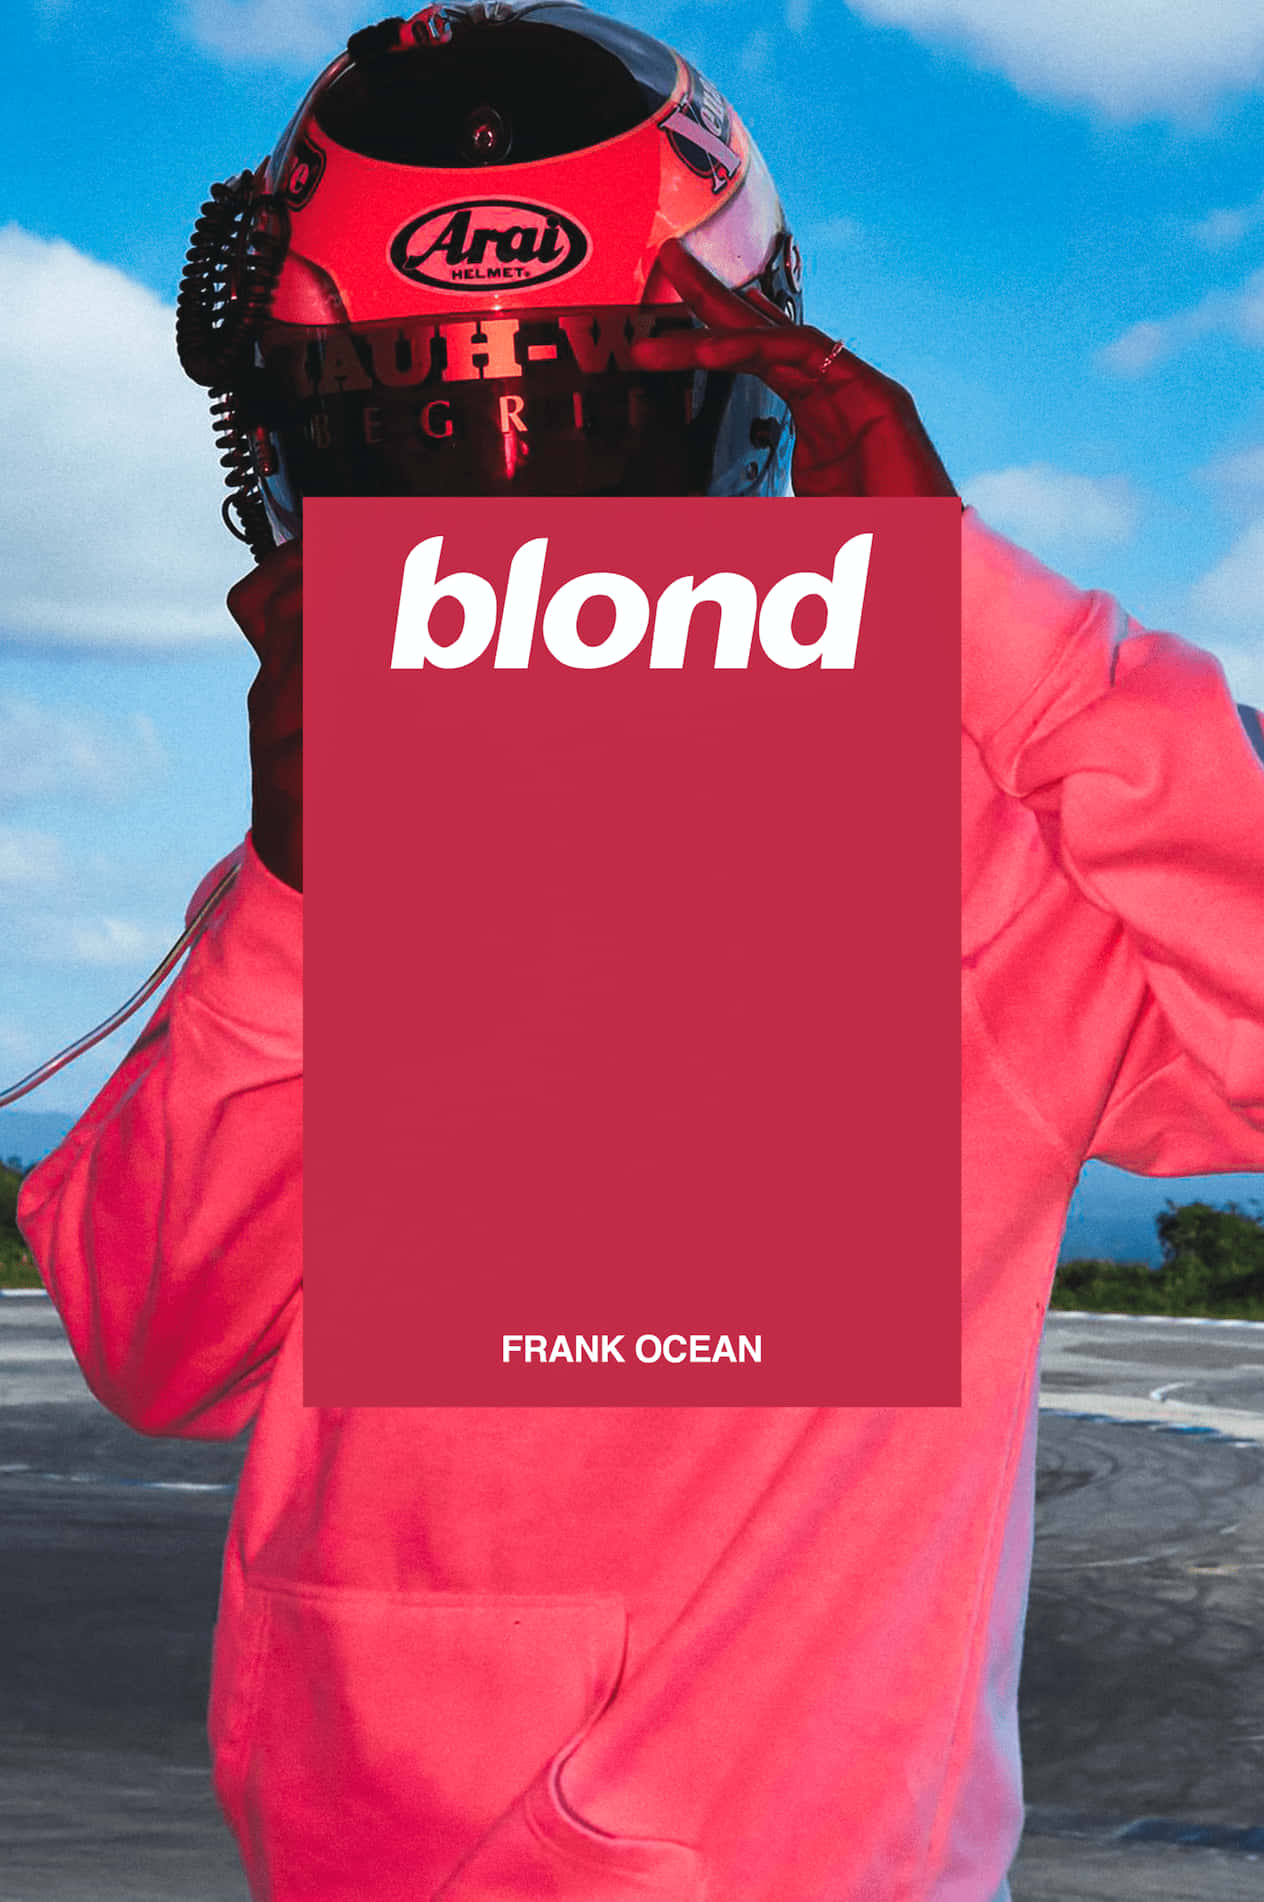 Download Frank Ocean's Blonde Album Cover Wallpaper